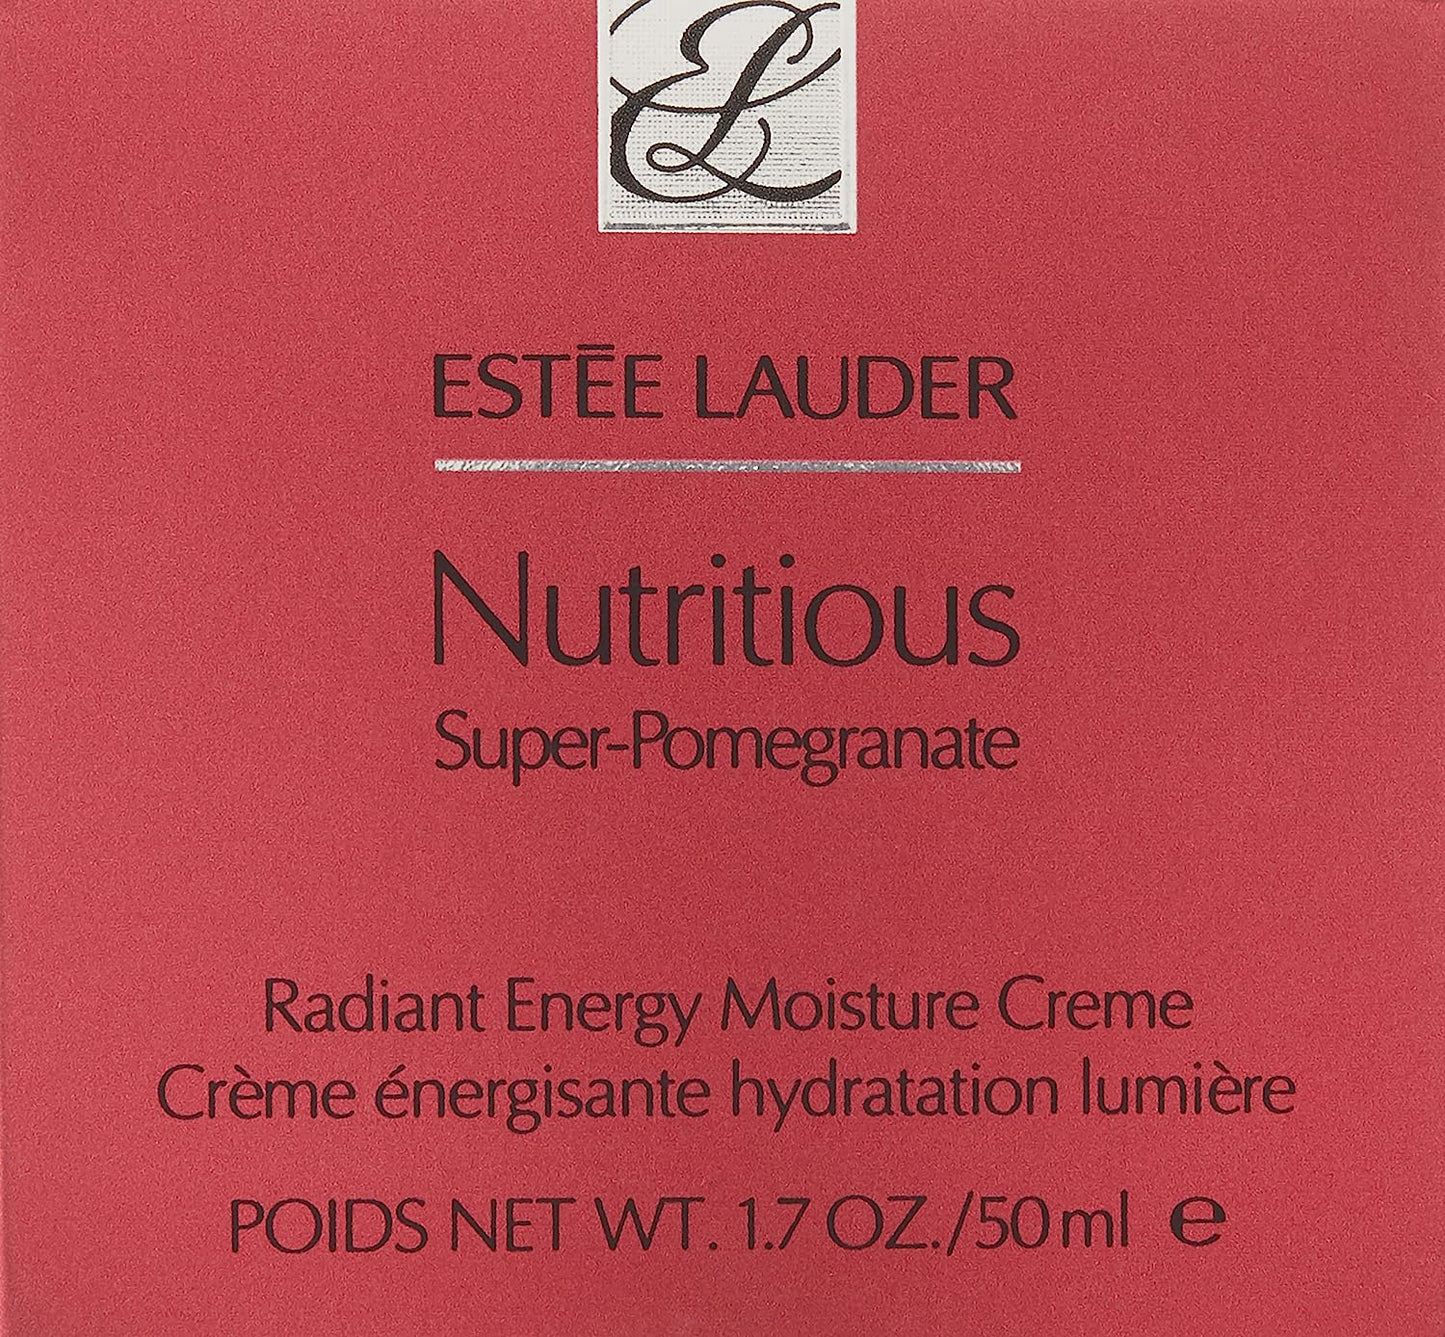 Estee Lauder Nutritious Super-Pomegranate Radiant Energy Moisture Creme